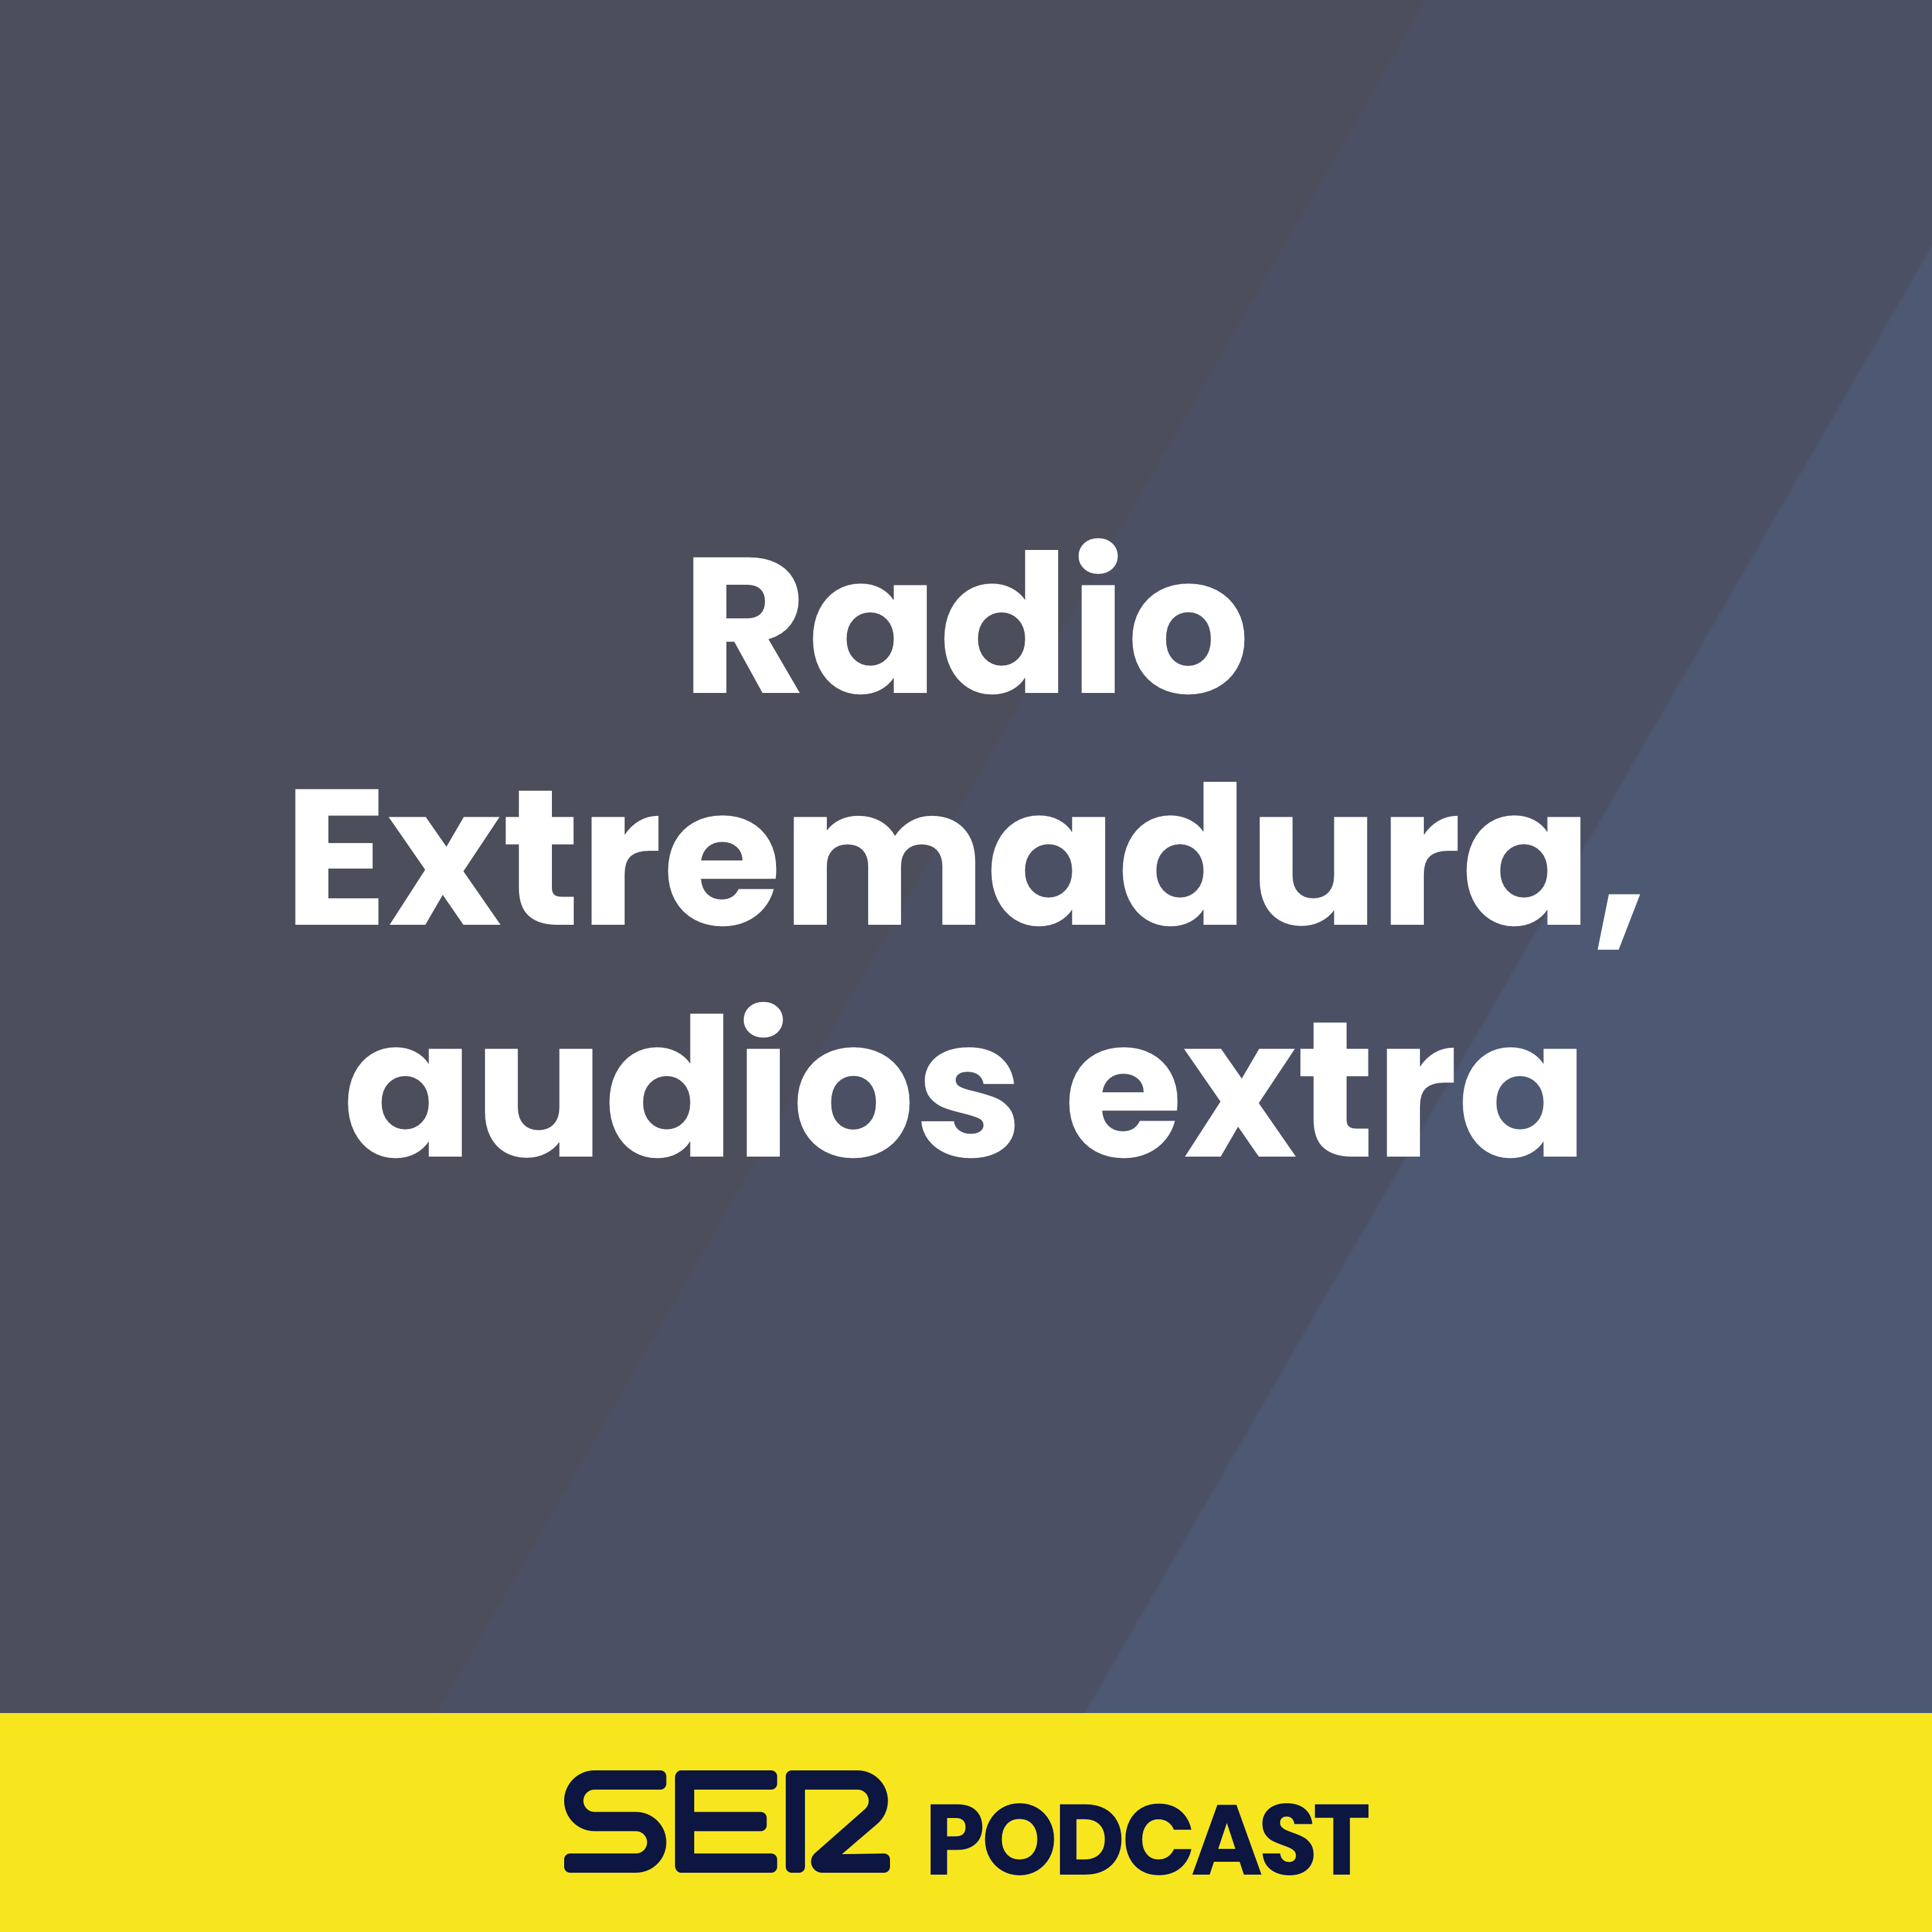 Radio Extremadura, audios extra